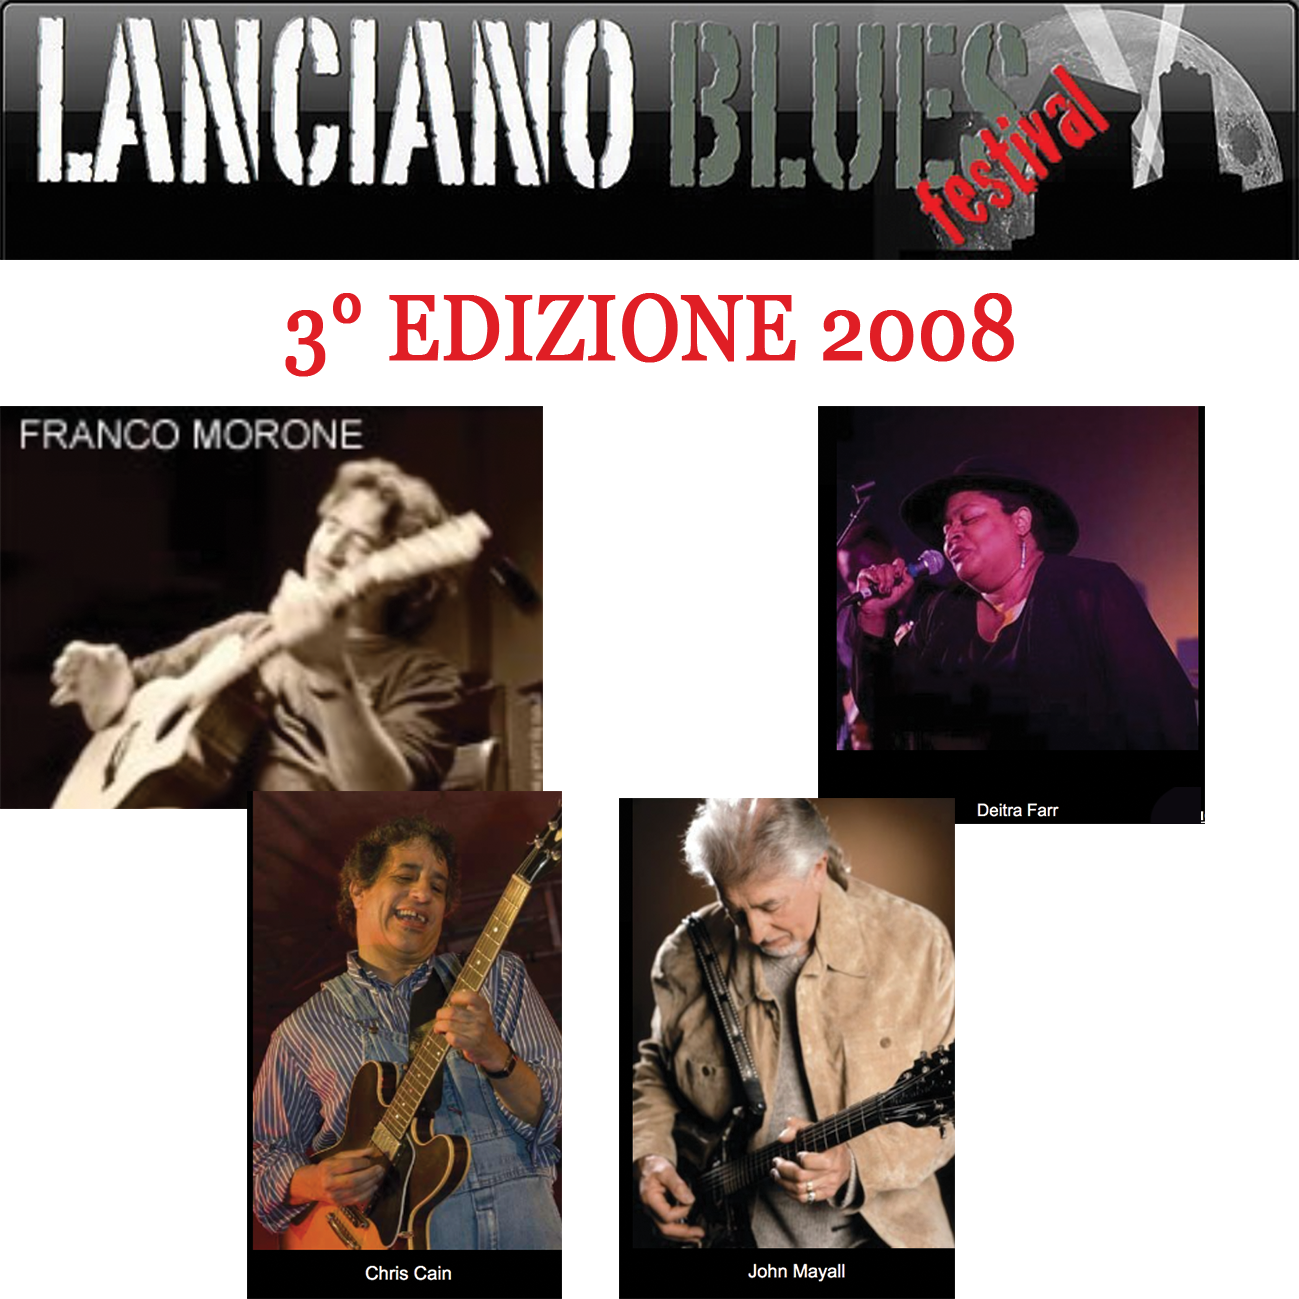 LANCIANO BLUES FESTIVAL 2008